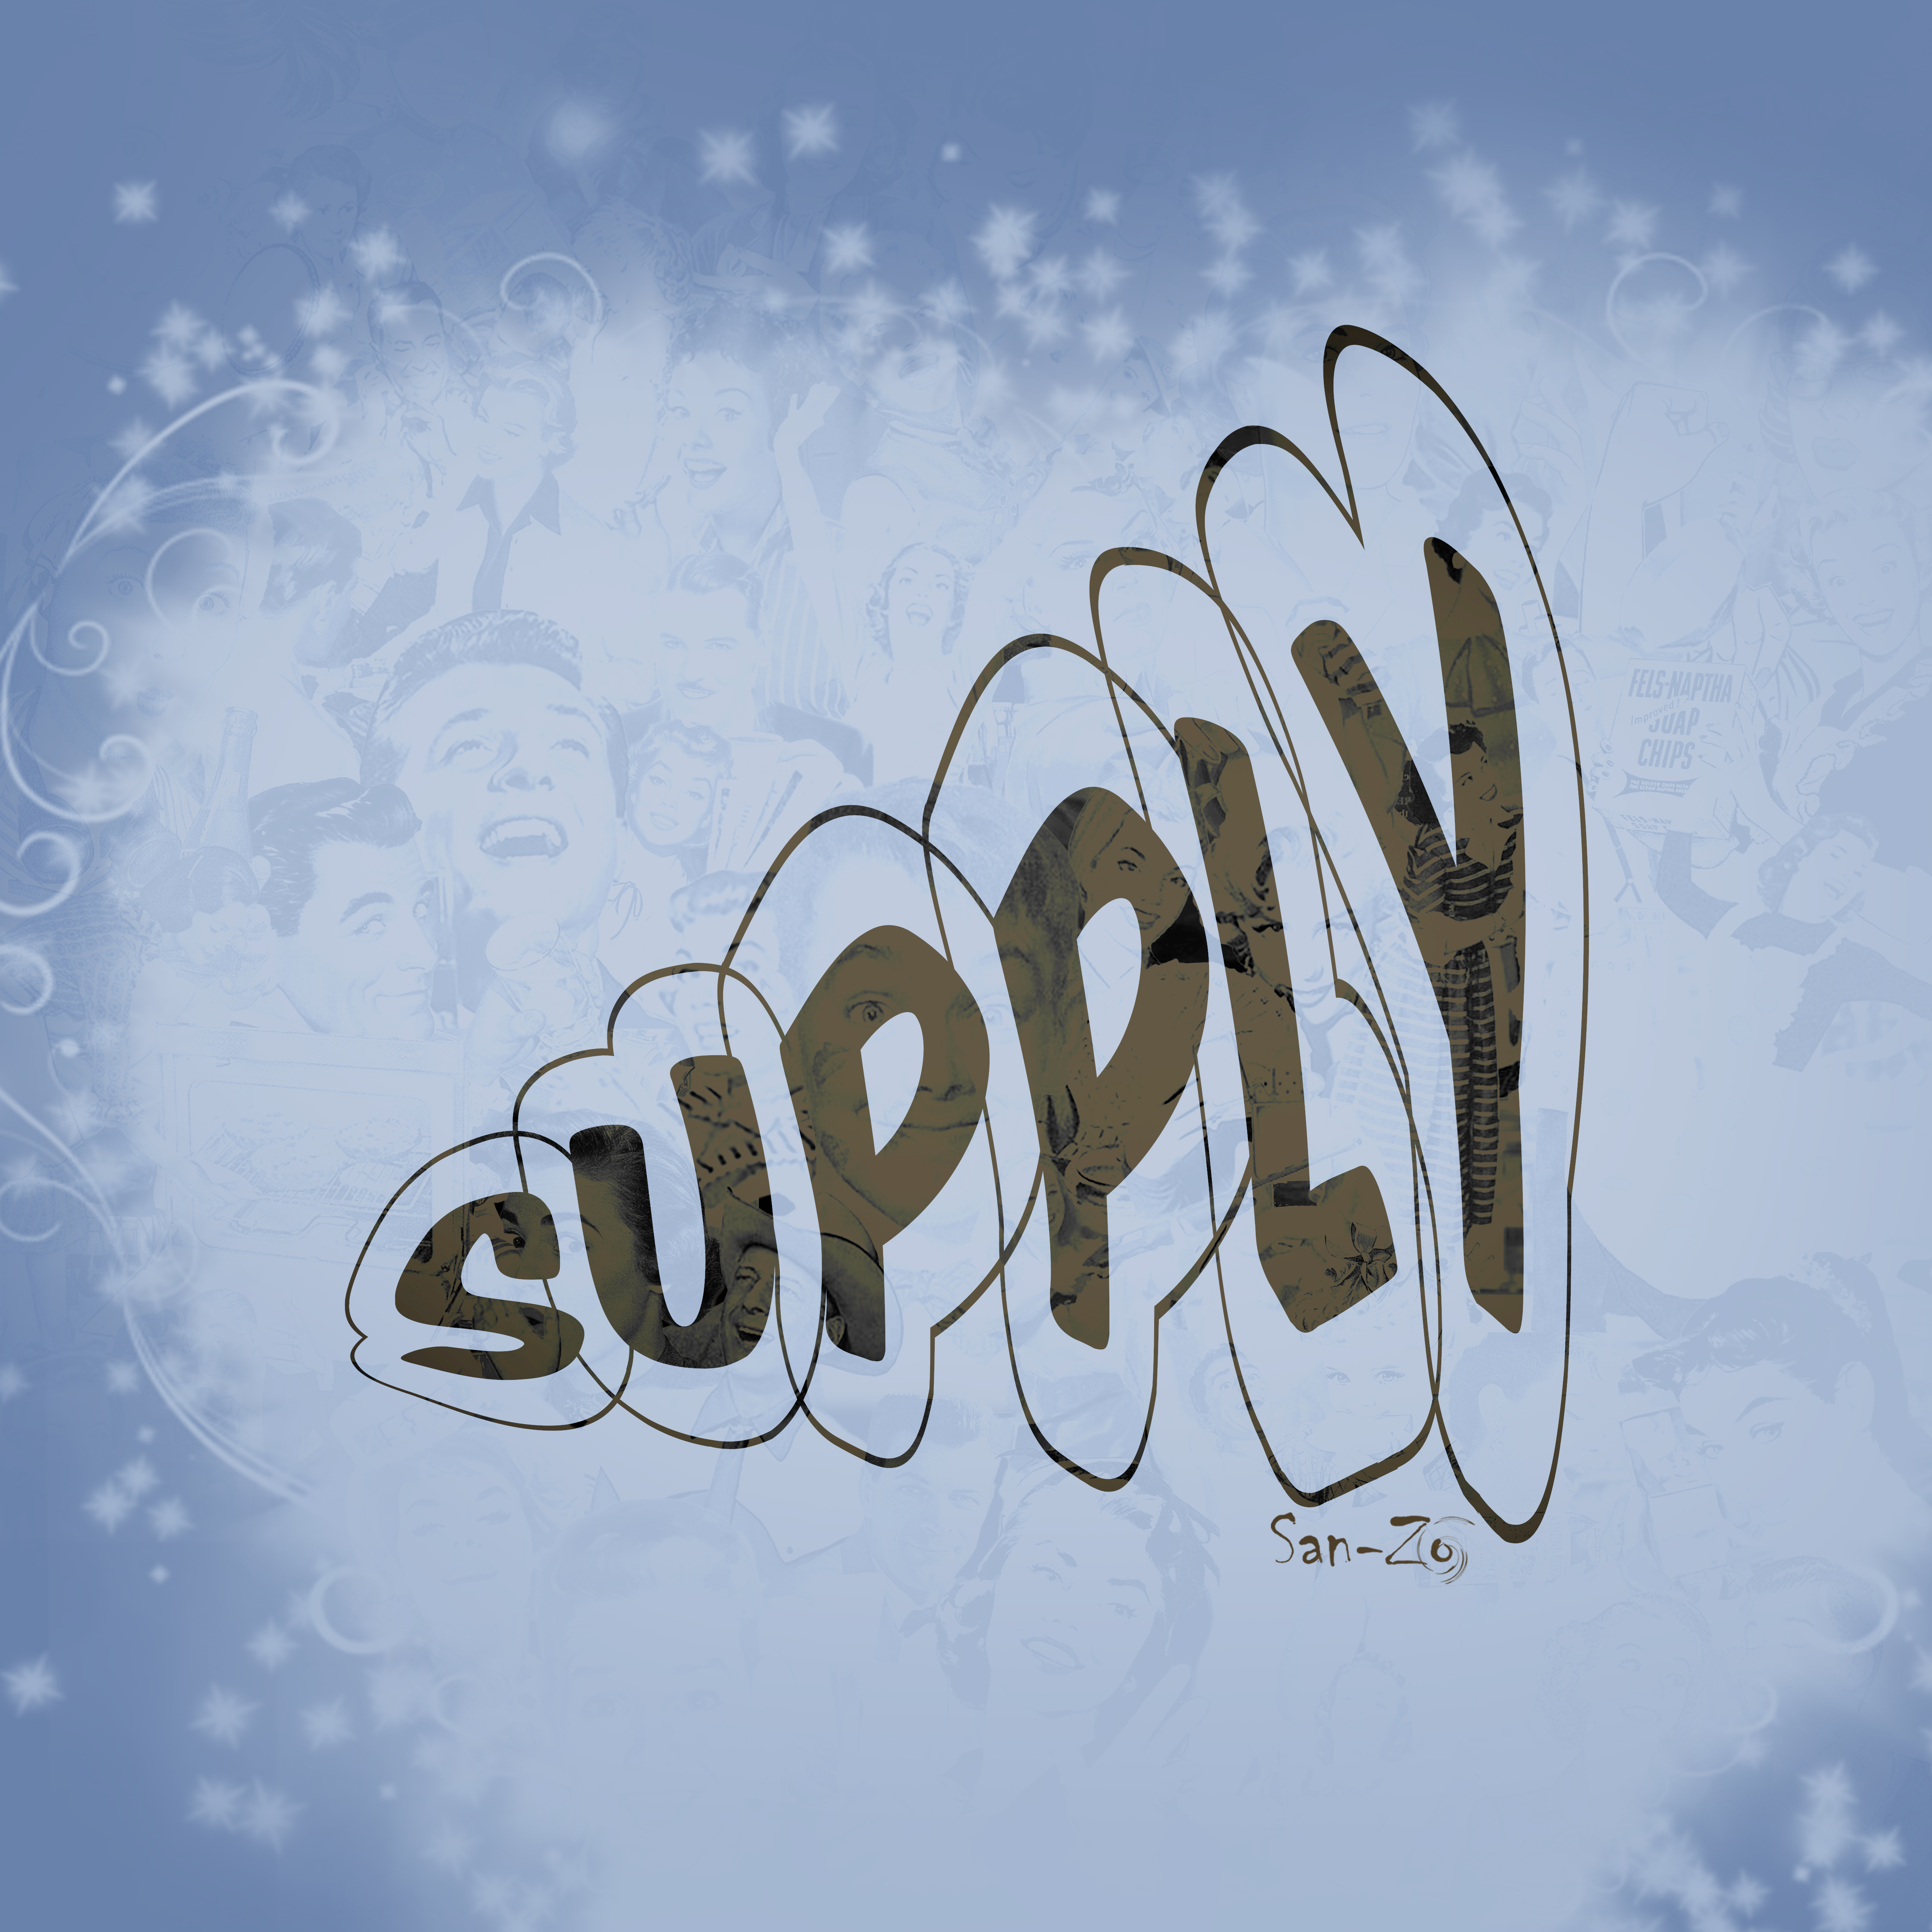 San-Zo – “Supply”